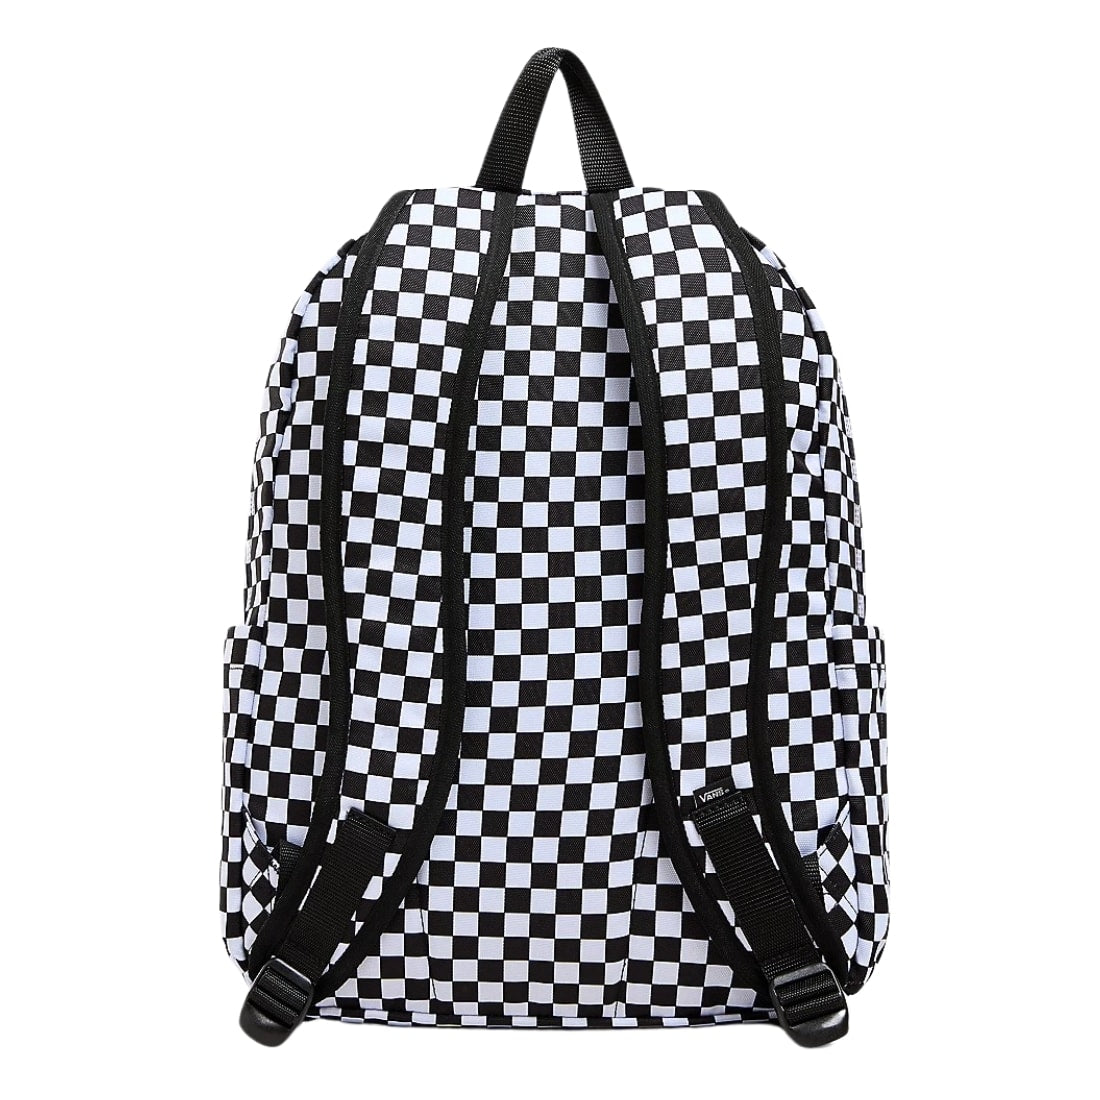 Vans Old Skool Check Backpack - Black/White SP24 - Backpack by Vans One Size